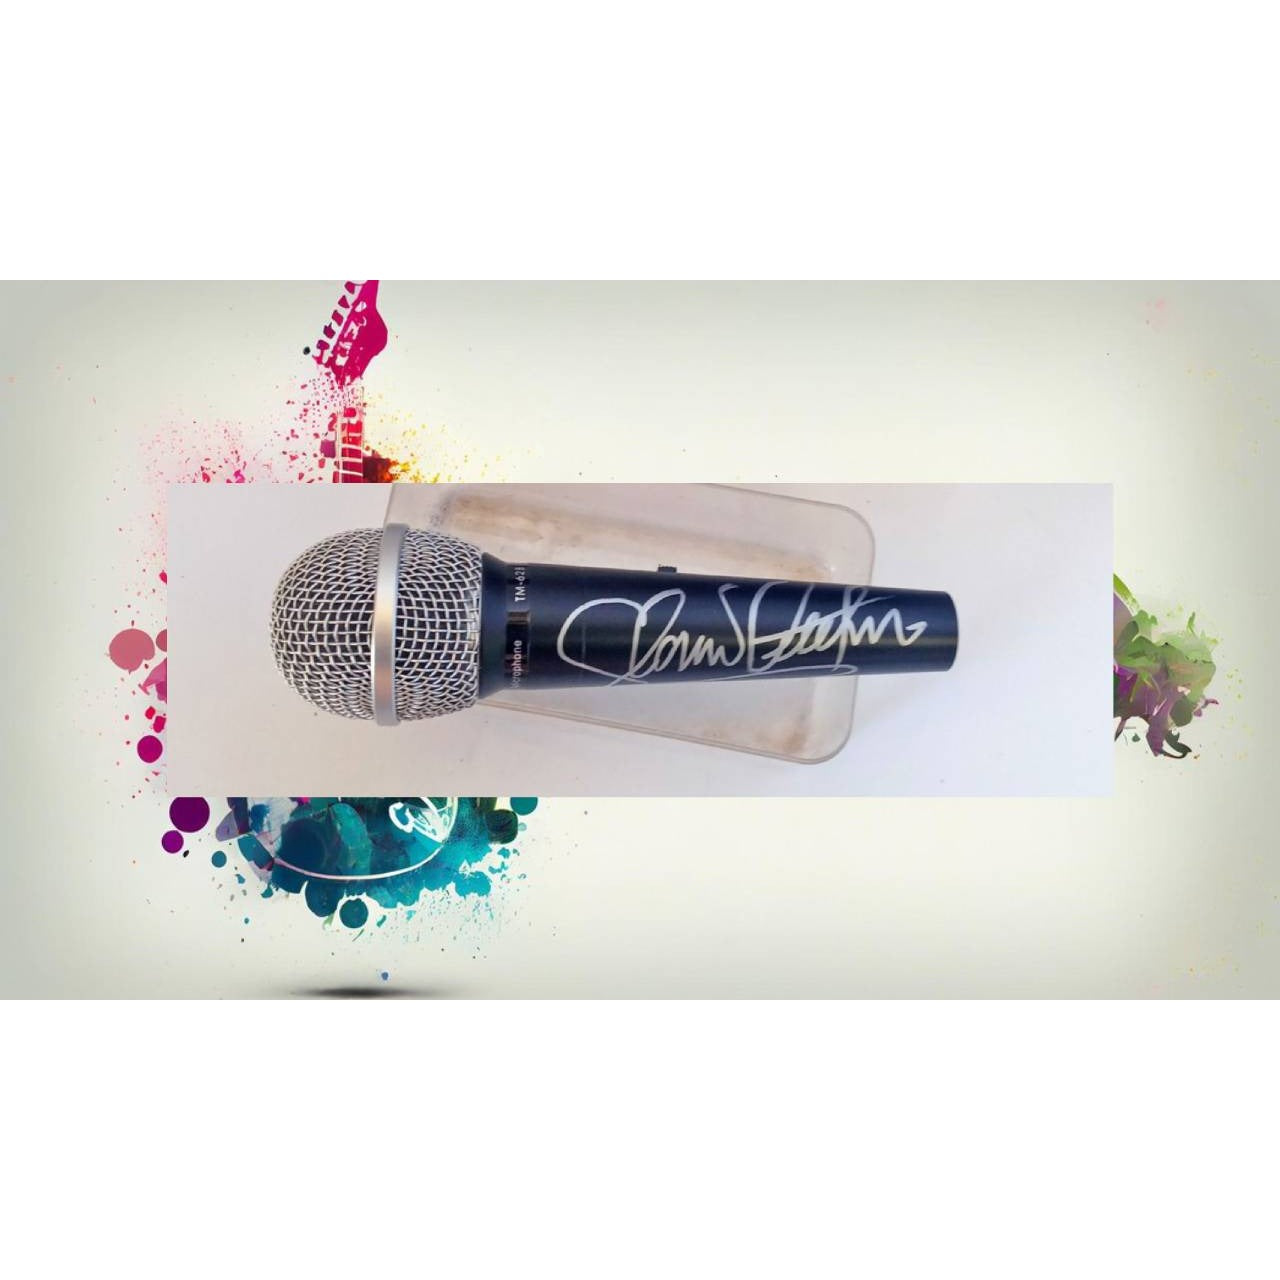 Gloria Estefan signed microphone with proof